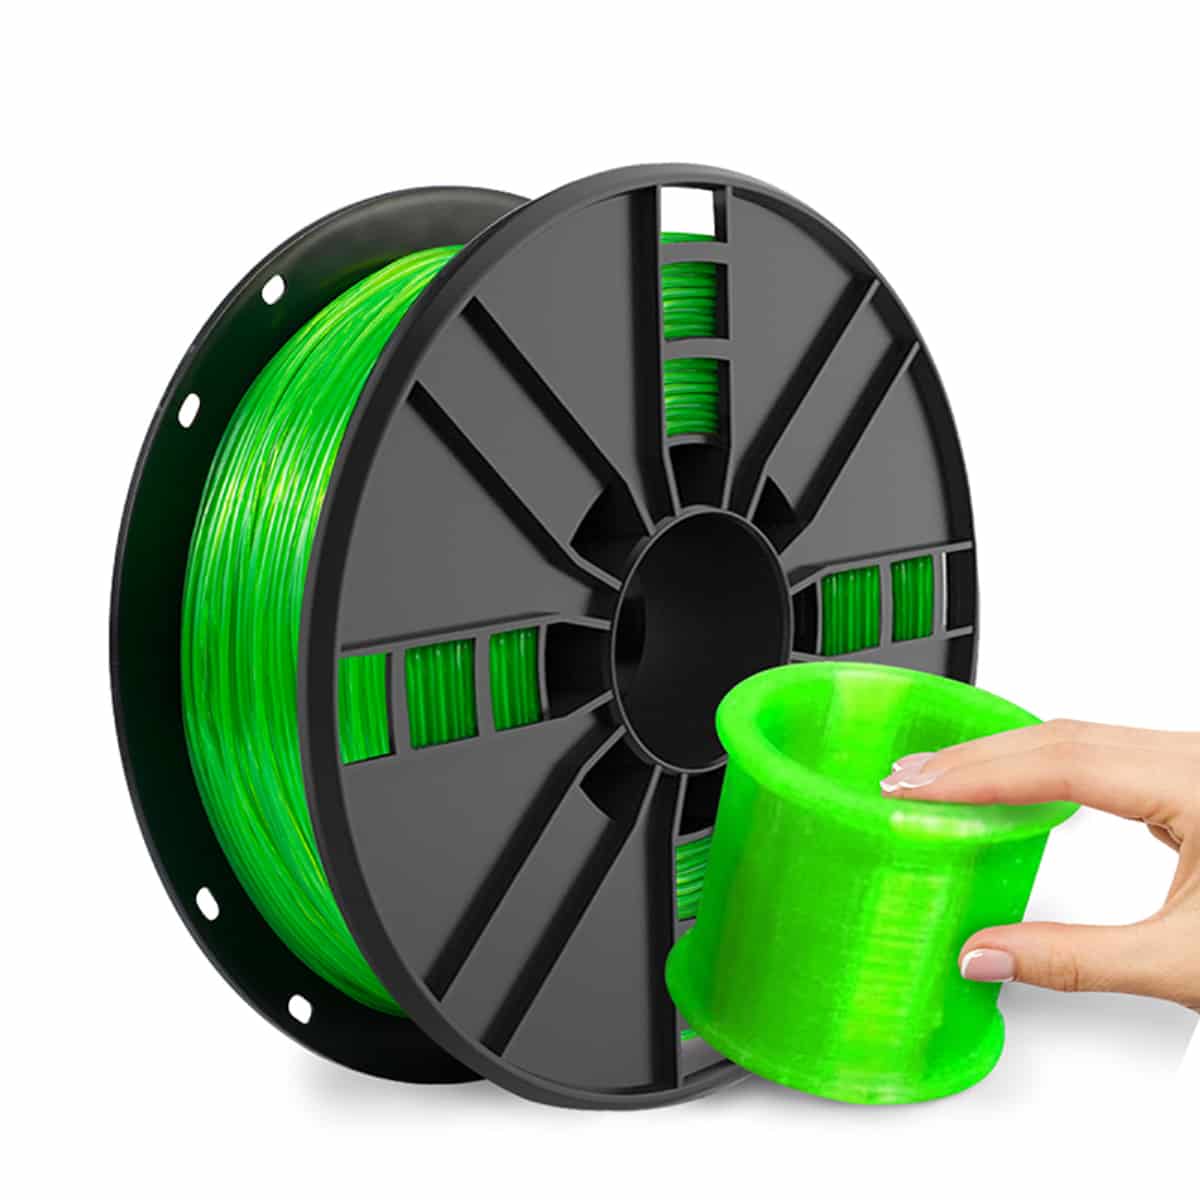 TPU flexible filament 1.75mm 1kg Green color for 3D printing